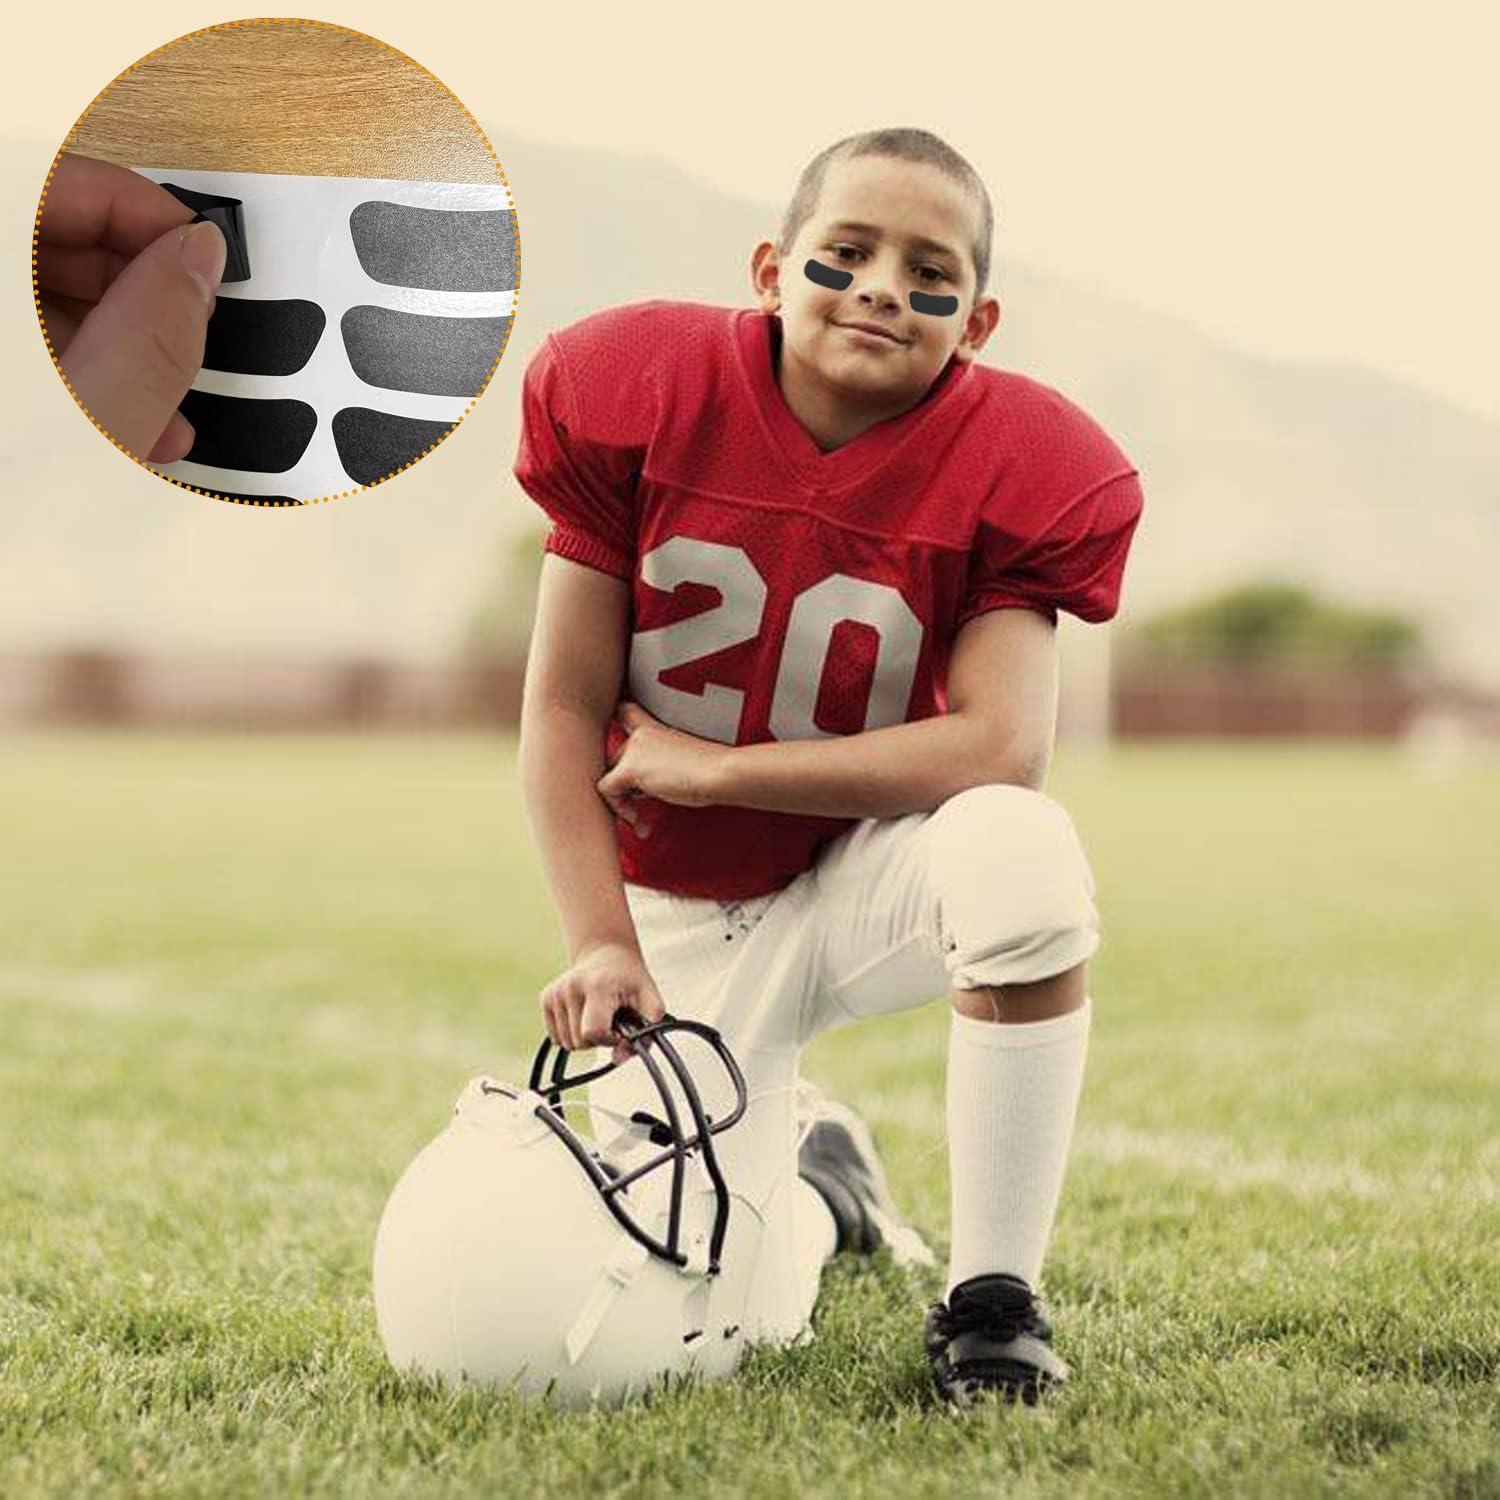 Sazoemao 200 Pairs Sports Eye Black Stickers for Kids,Eye Strips